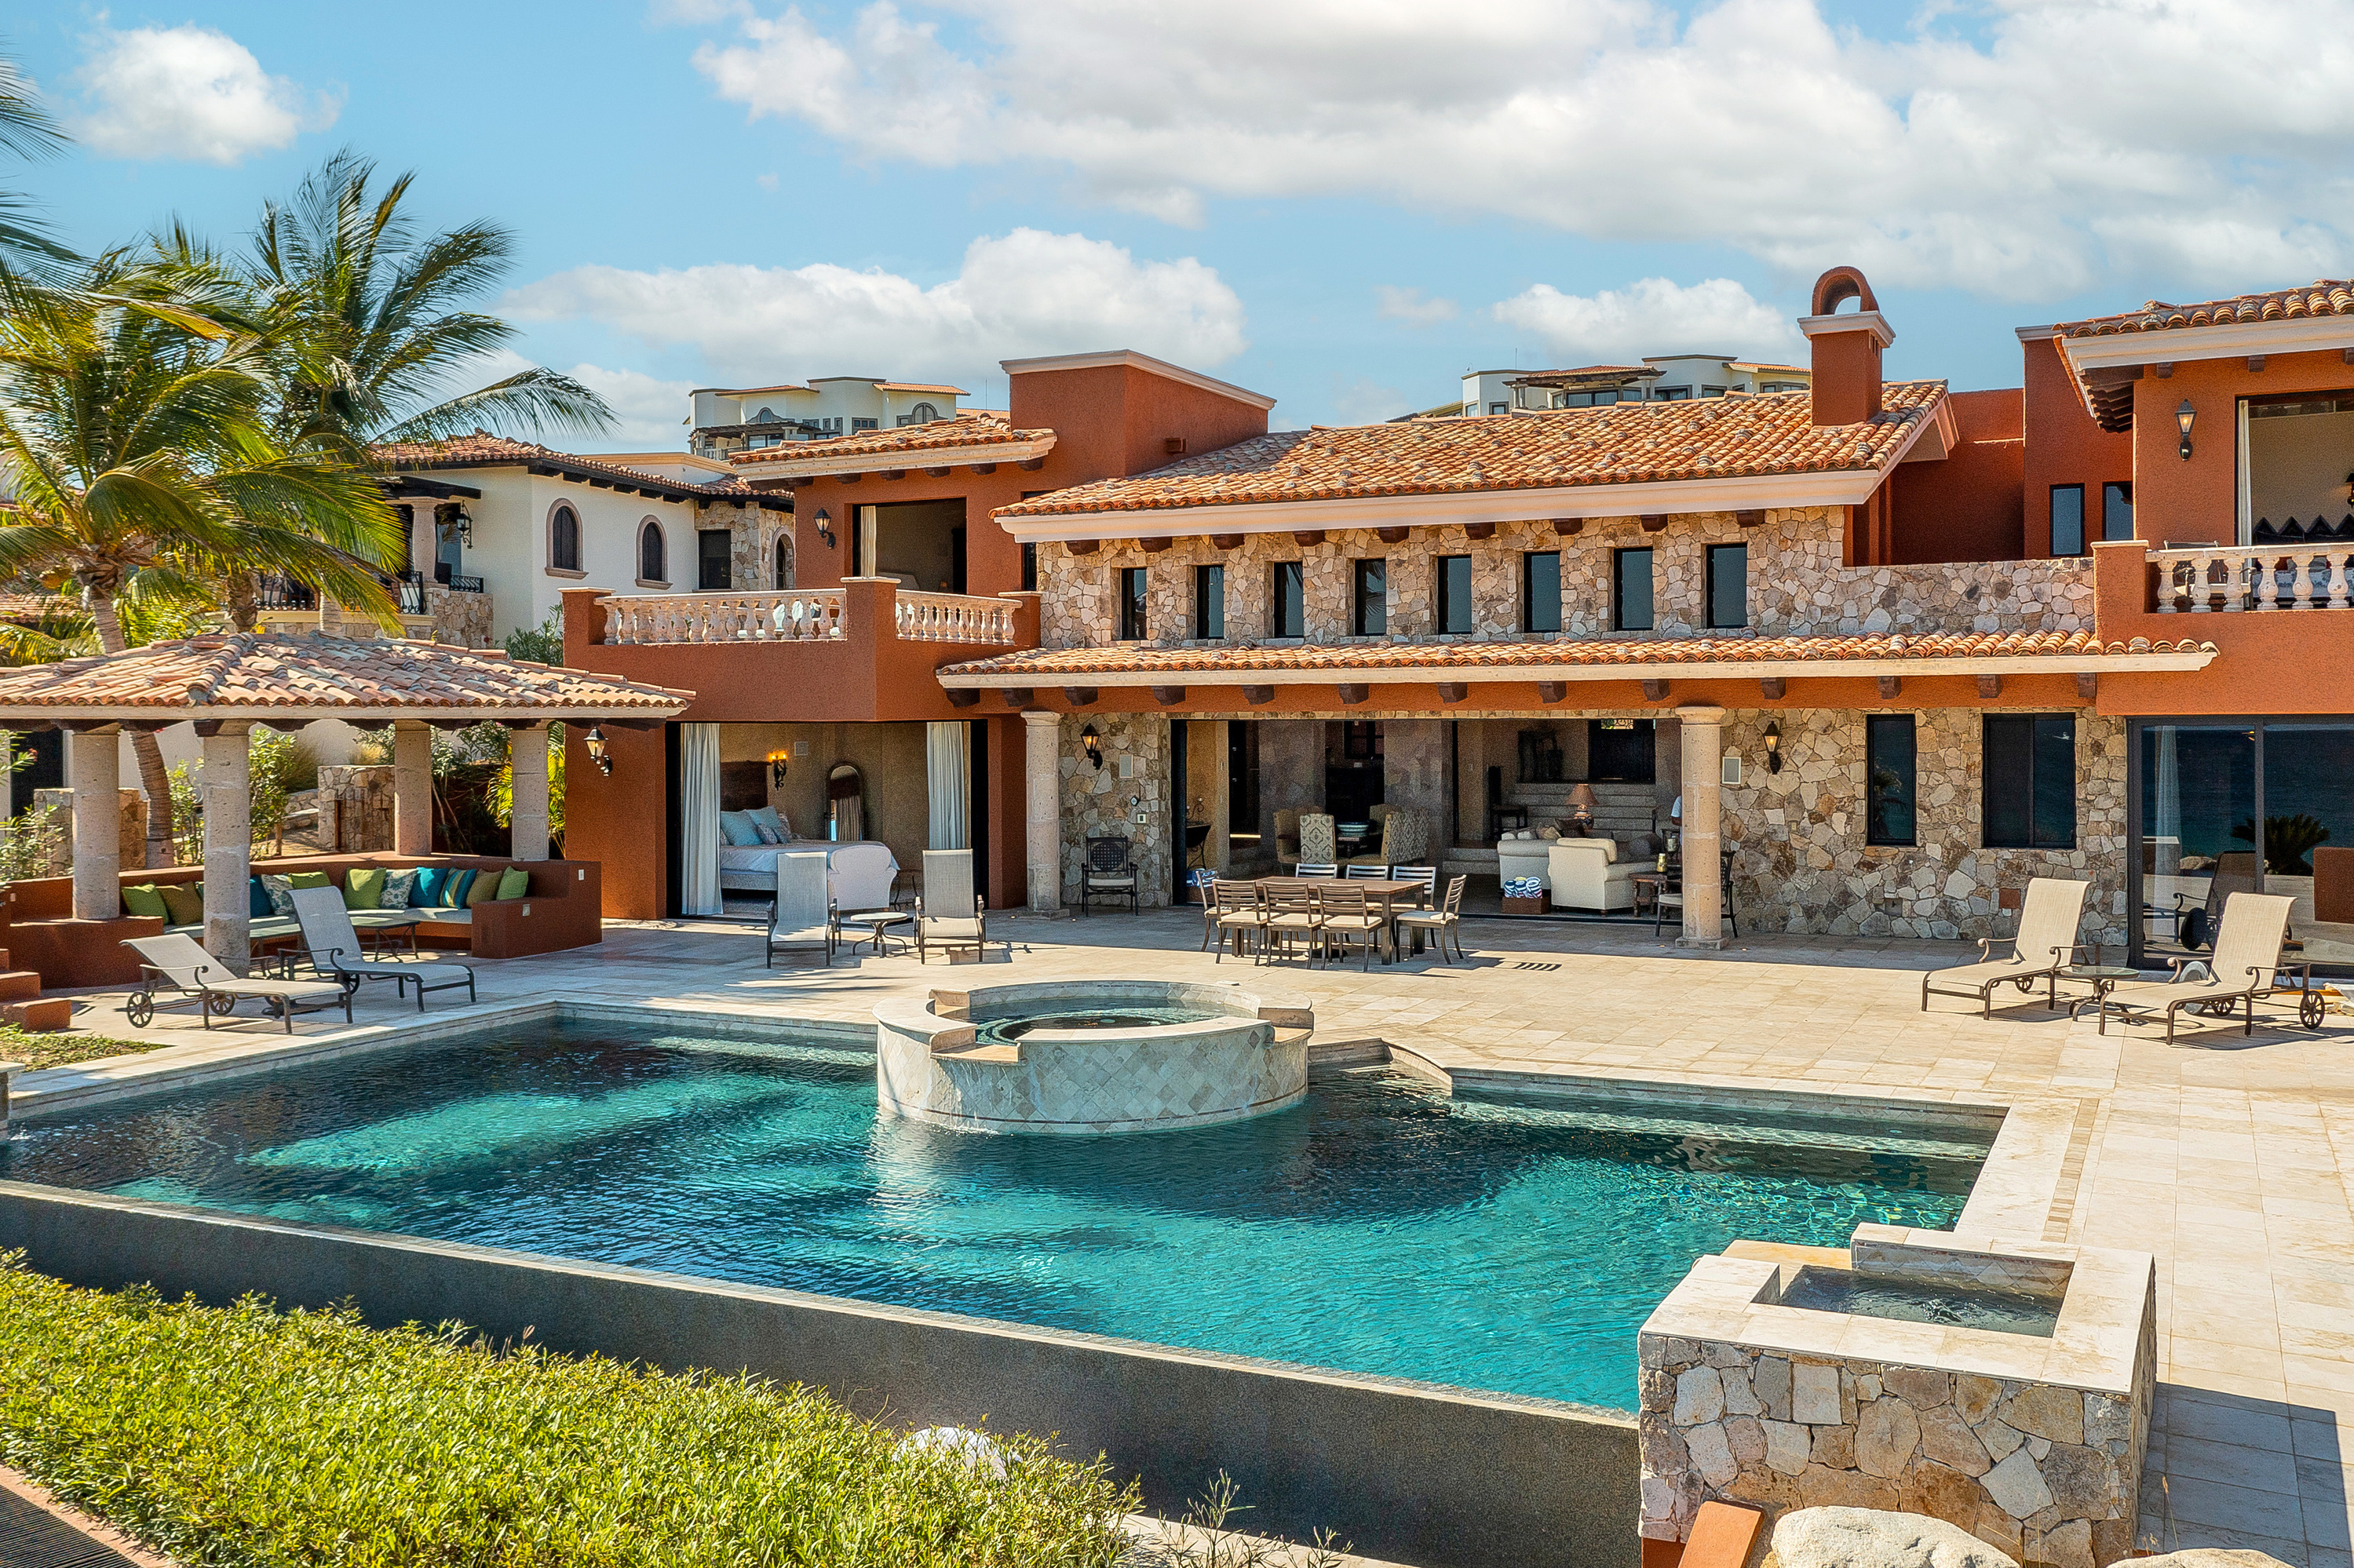 Poolside view of gorgeous villa exterior